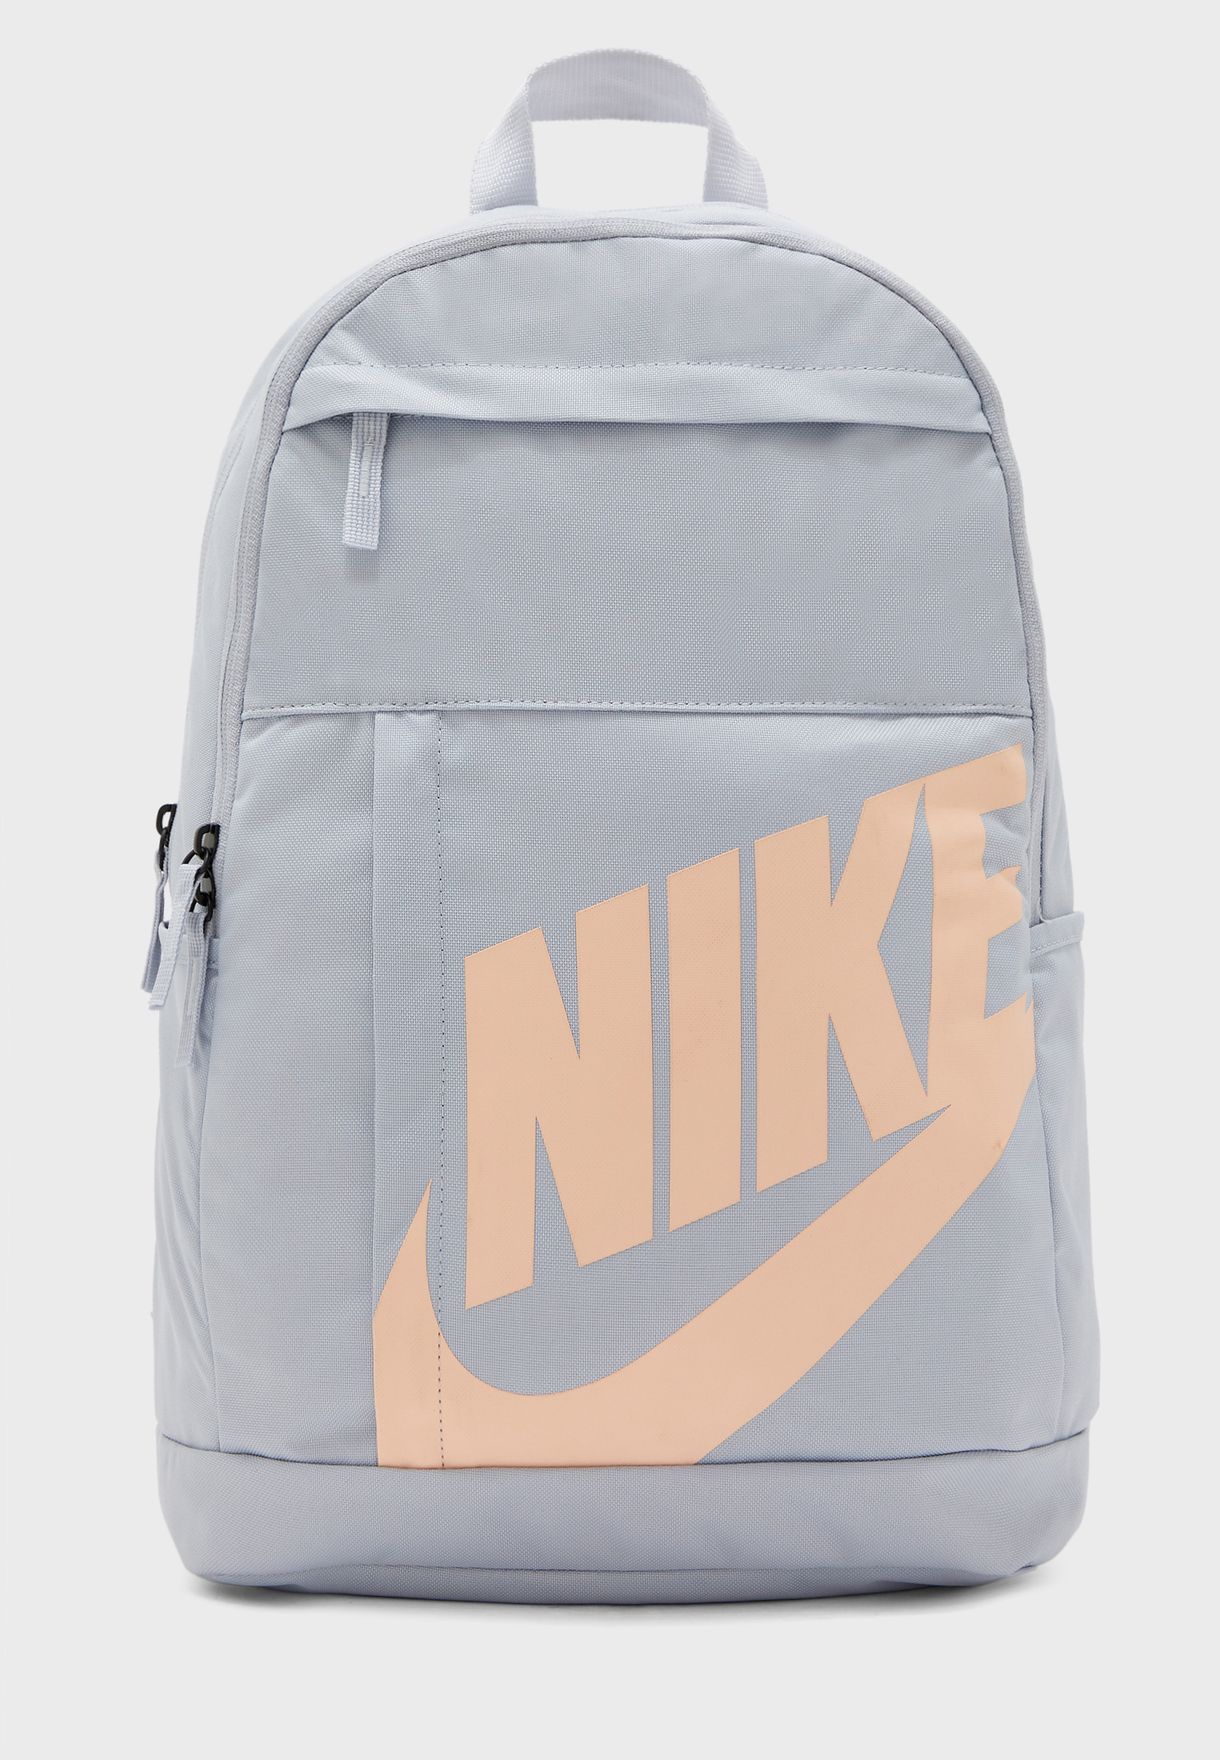 nike elemental backpack grey and pink